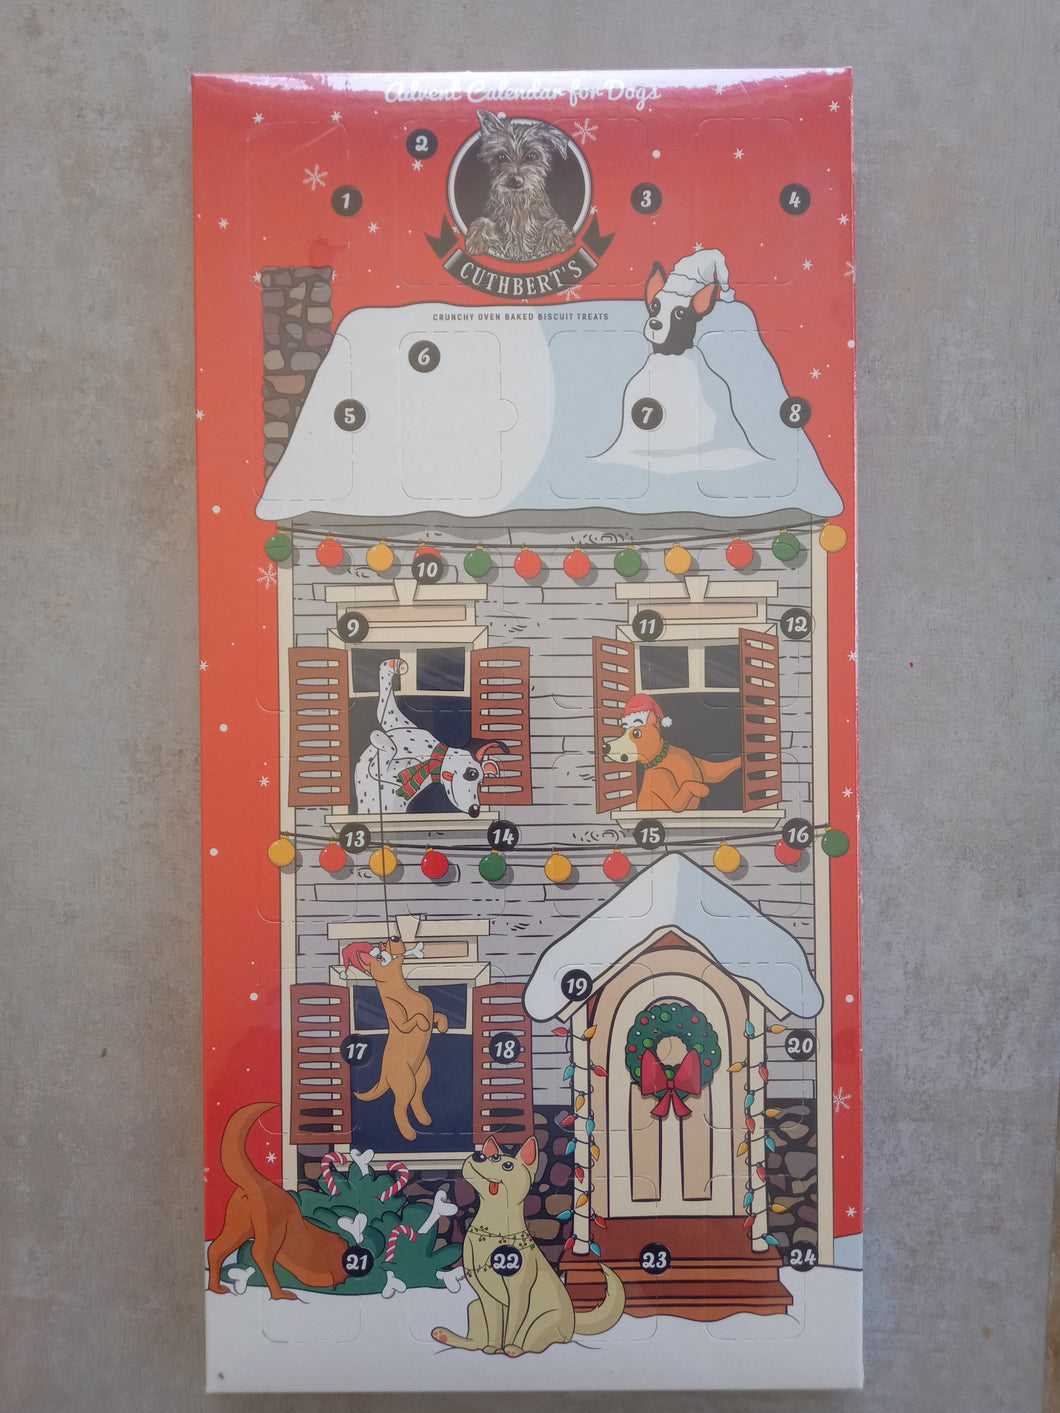 Cuthbert's Christmas Advent Calendar for Dogs